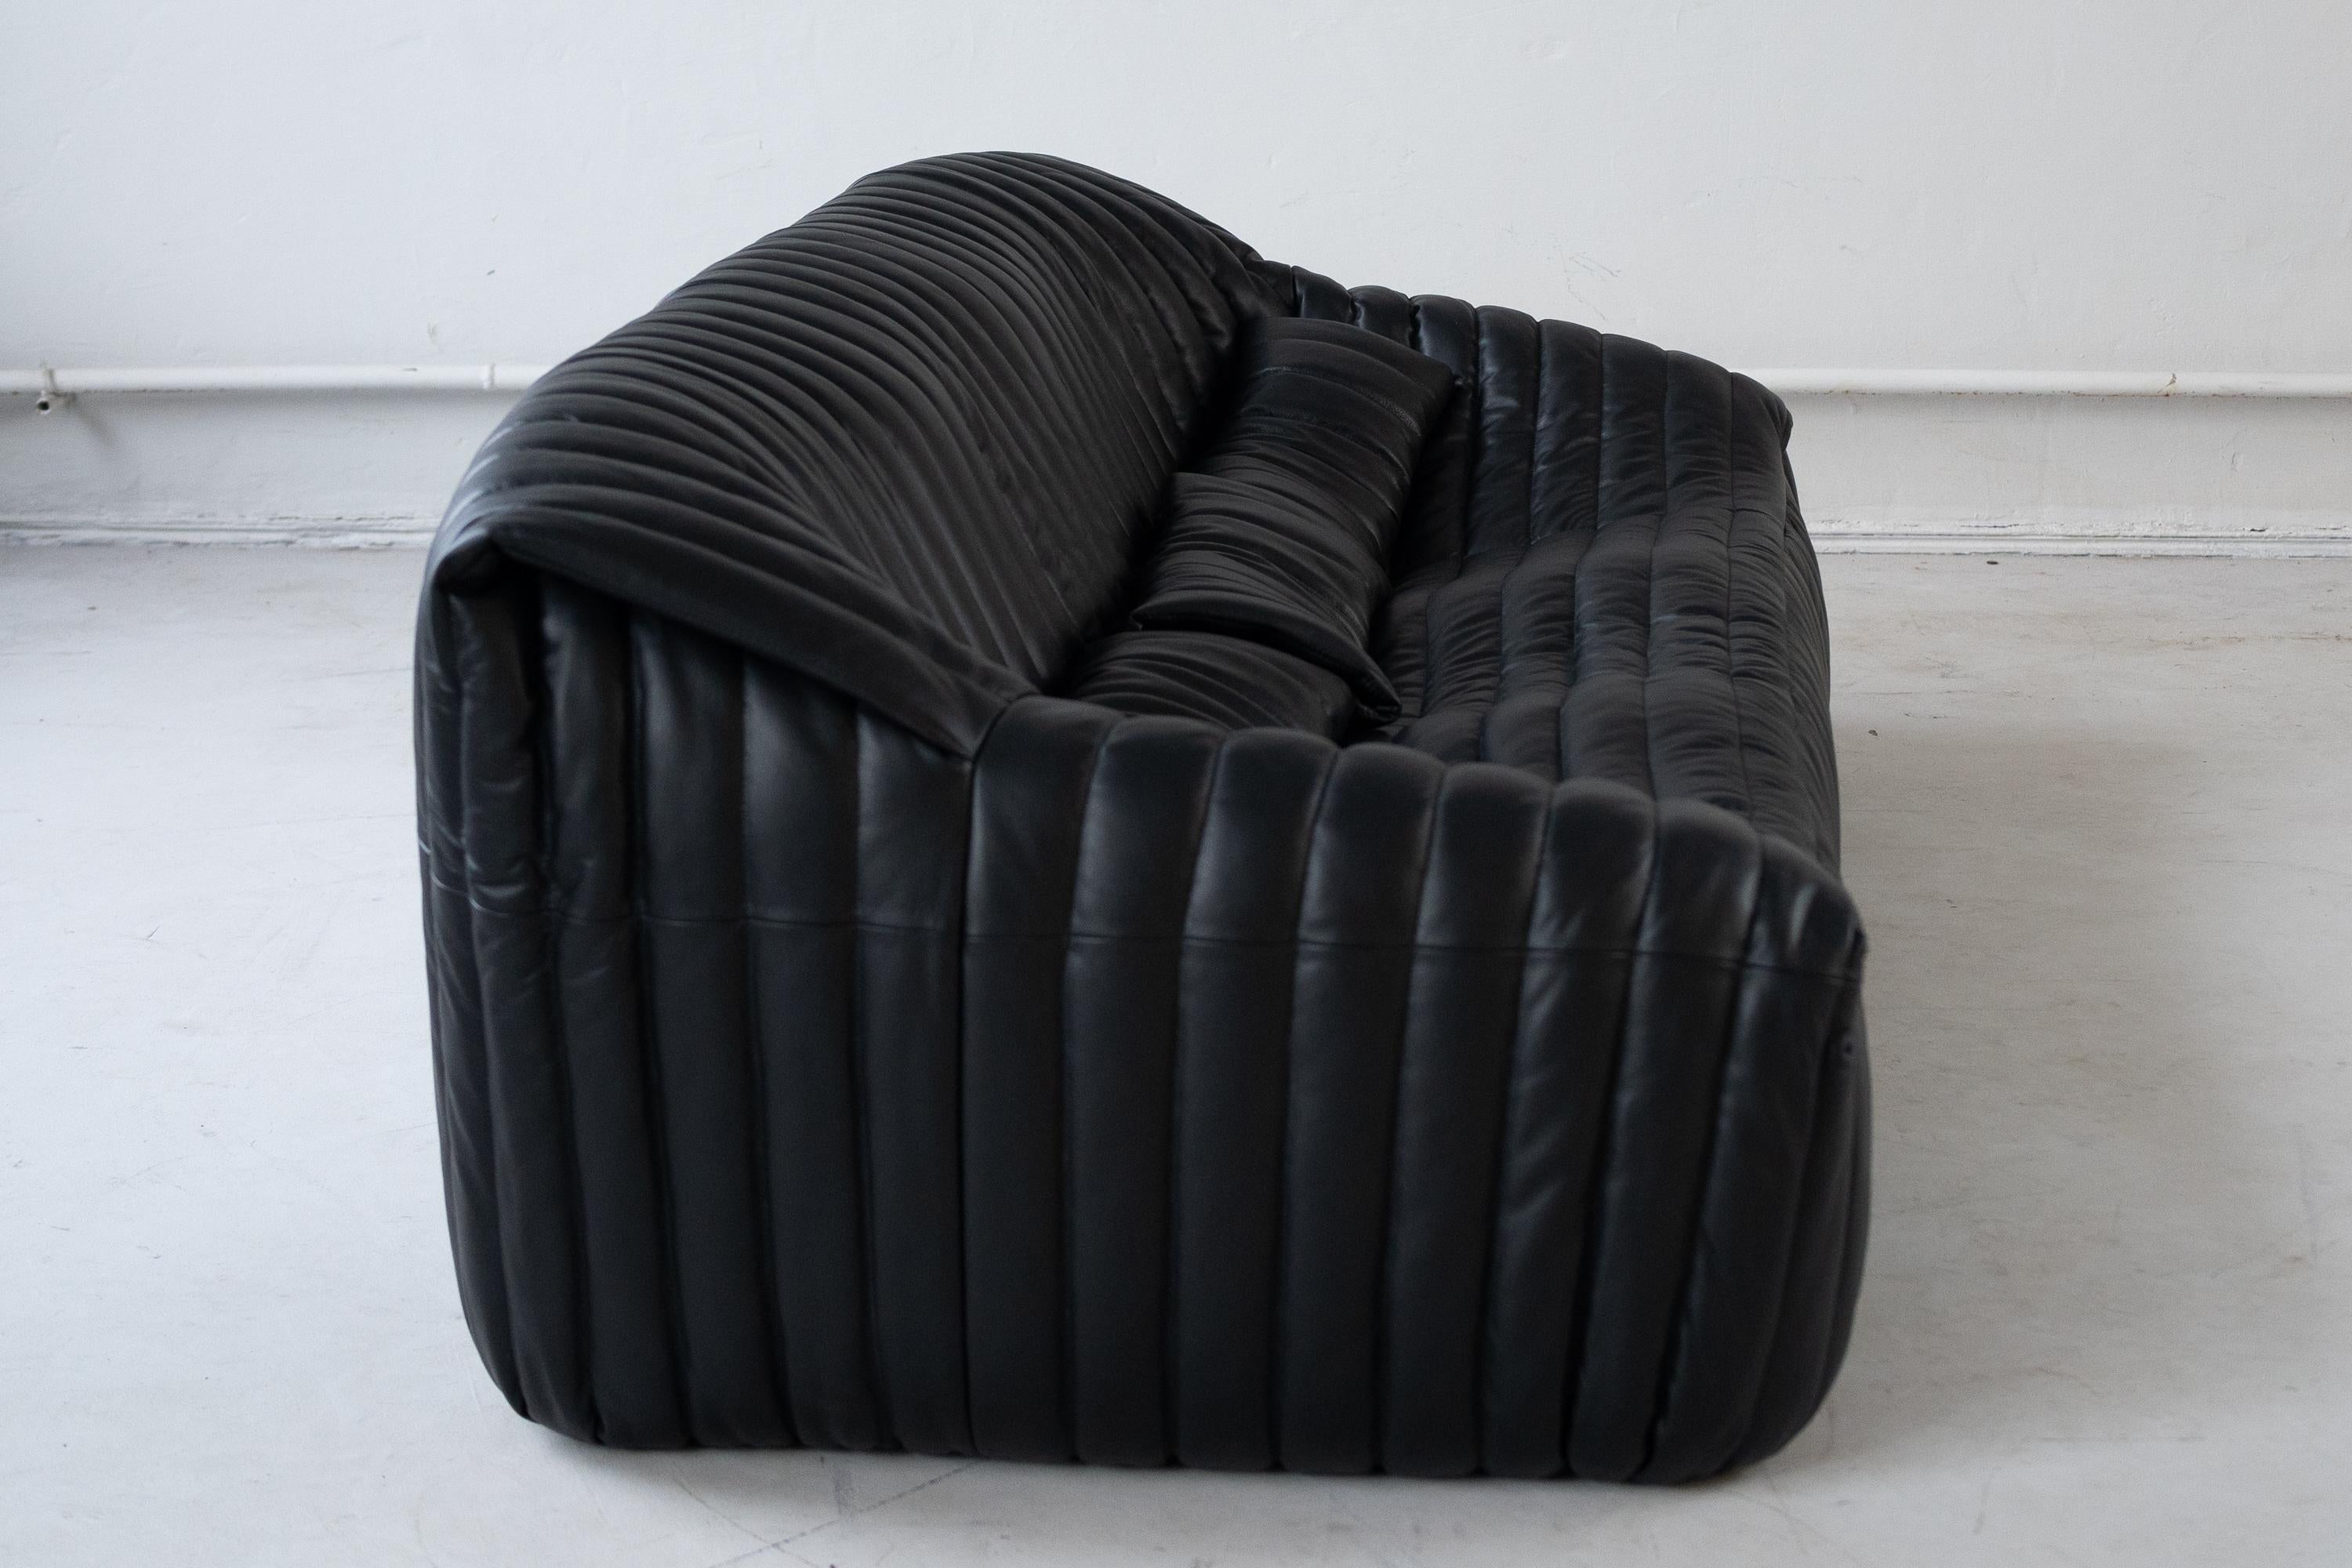 French  Sandra sofa  designed by Annie Hiéronimus for Cinna  For Sale